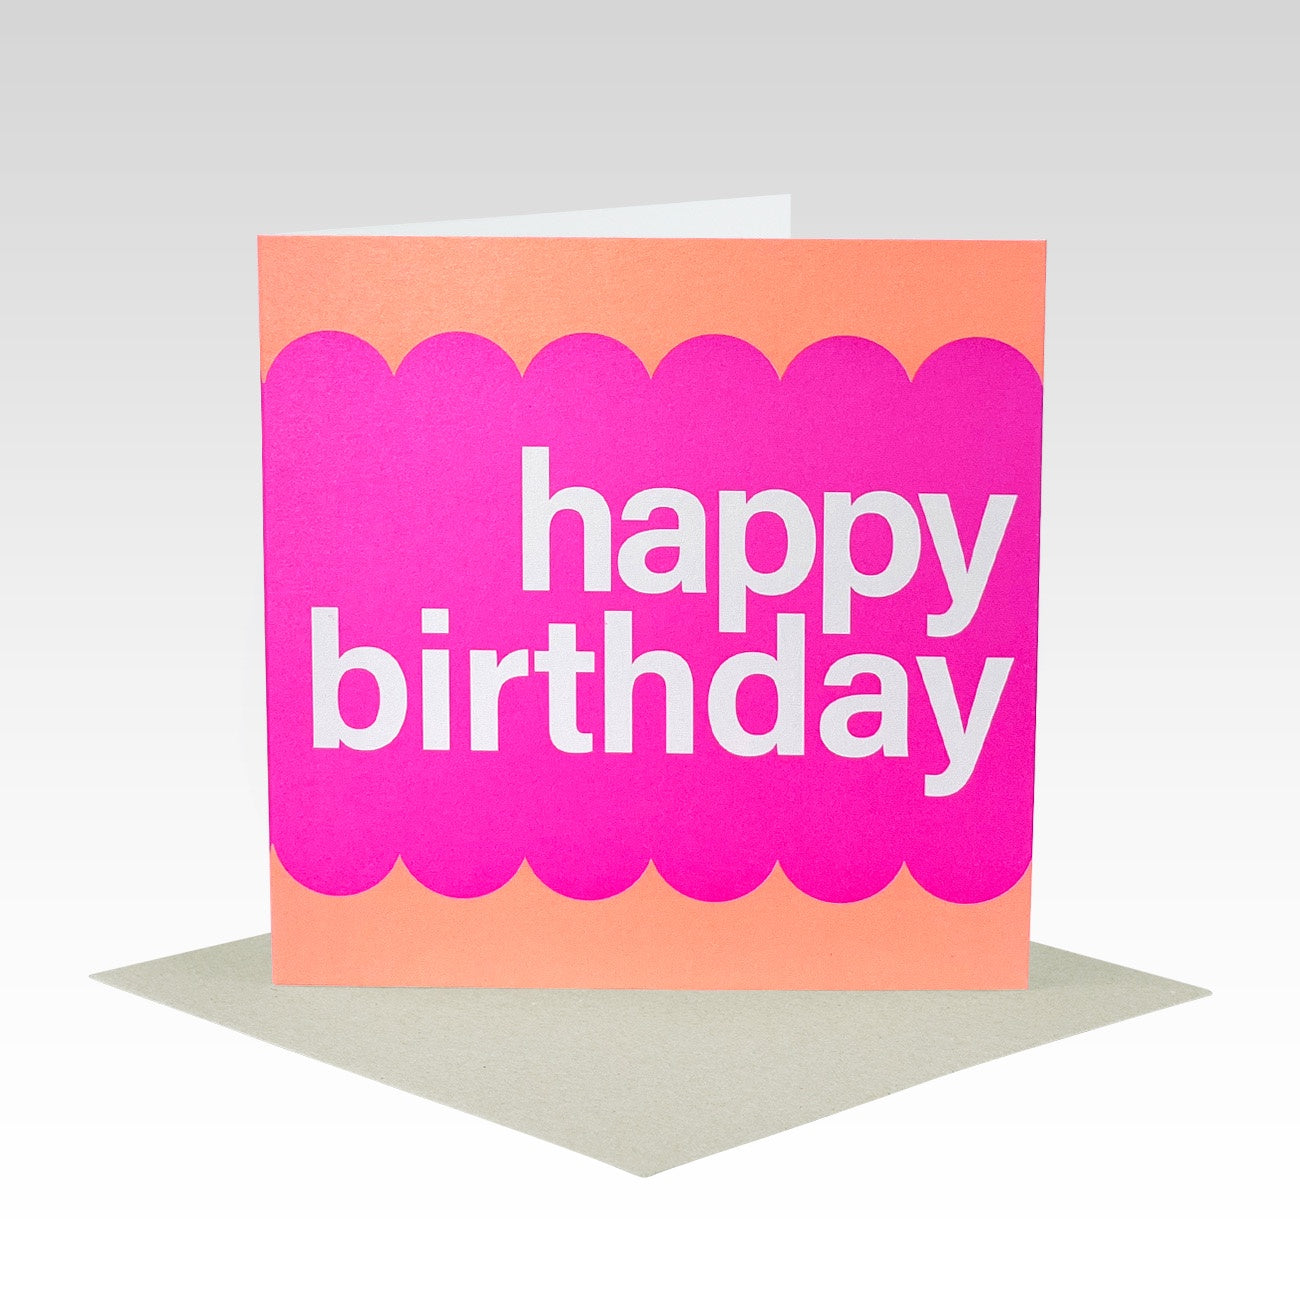 Rhicreative - Gift Card - Fluoro Pink & Peach Scallop Birthday